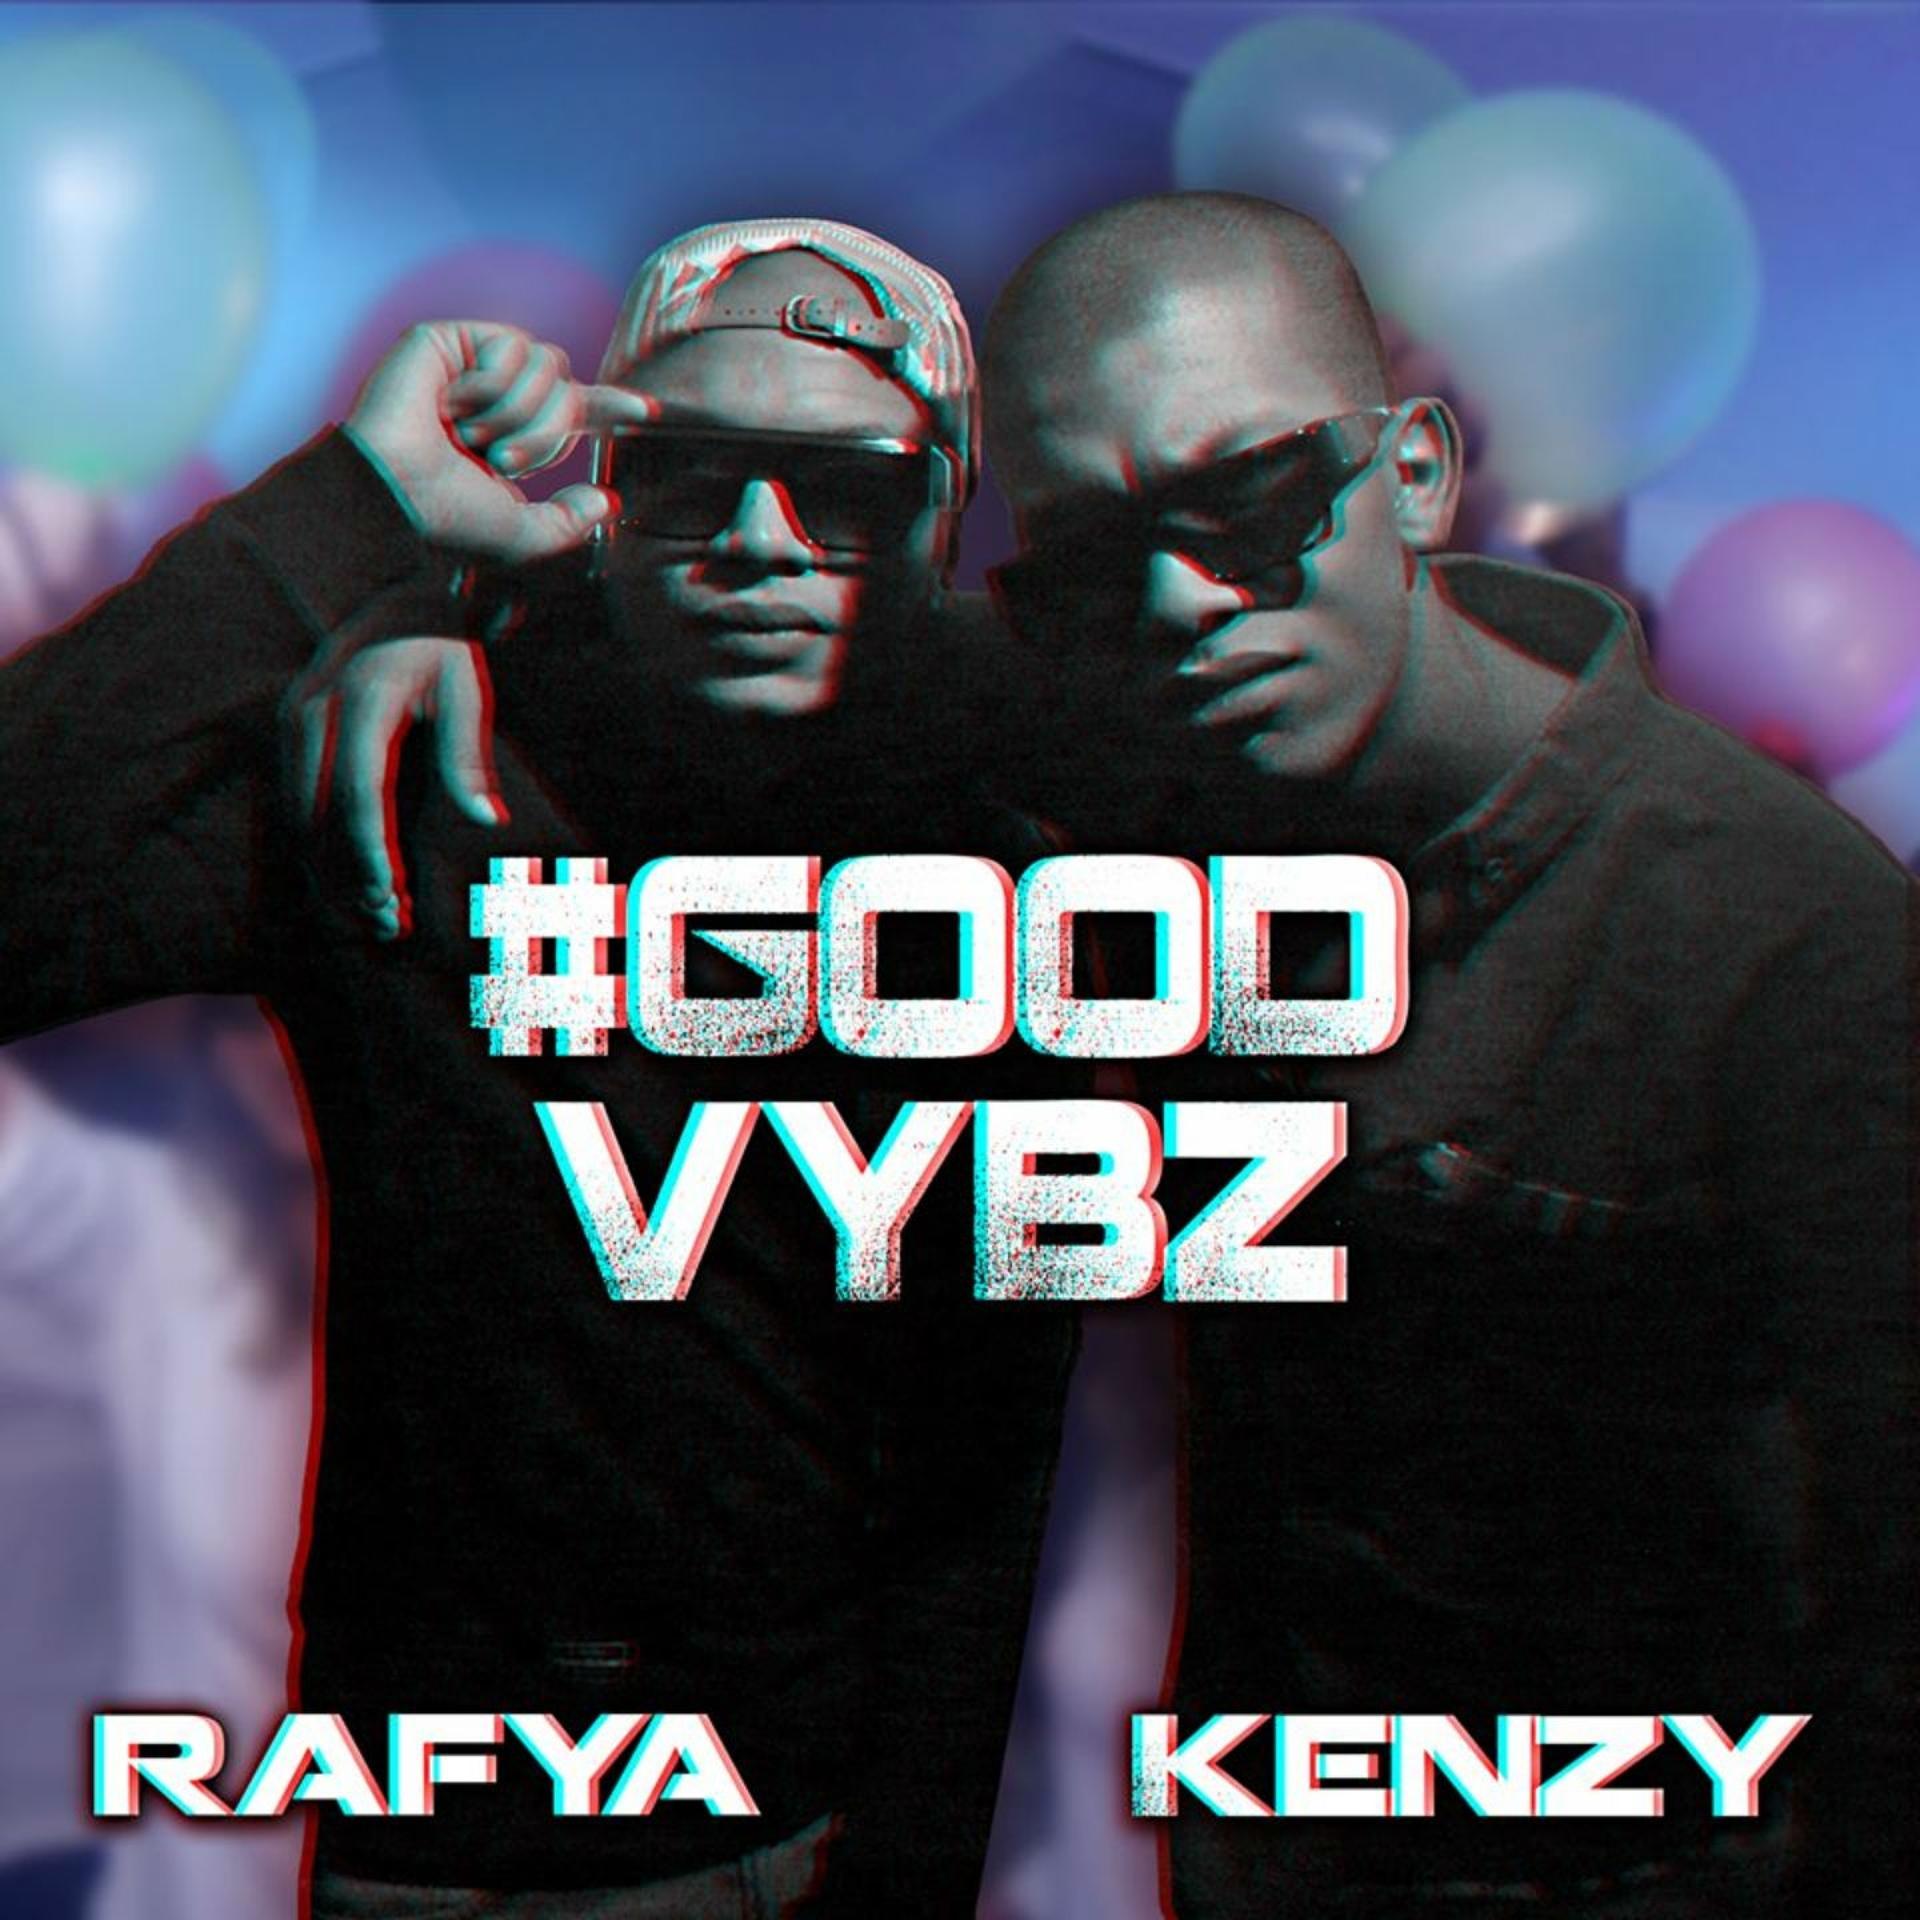 Постер к треку Rafya, Kenzy - Good Vybz